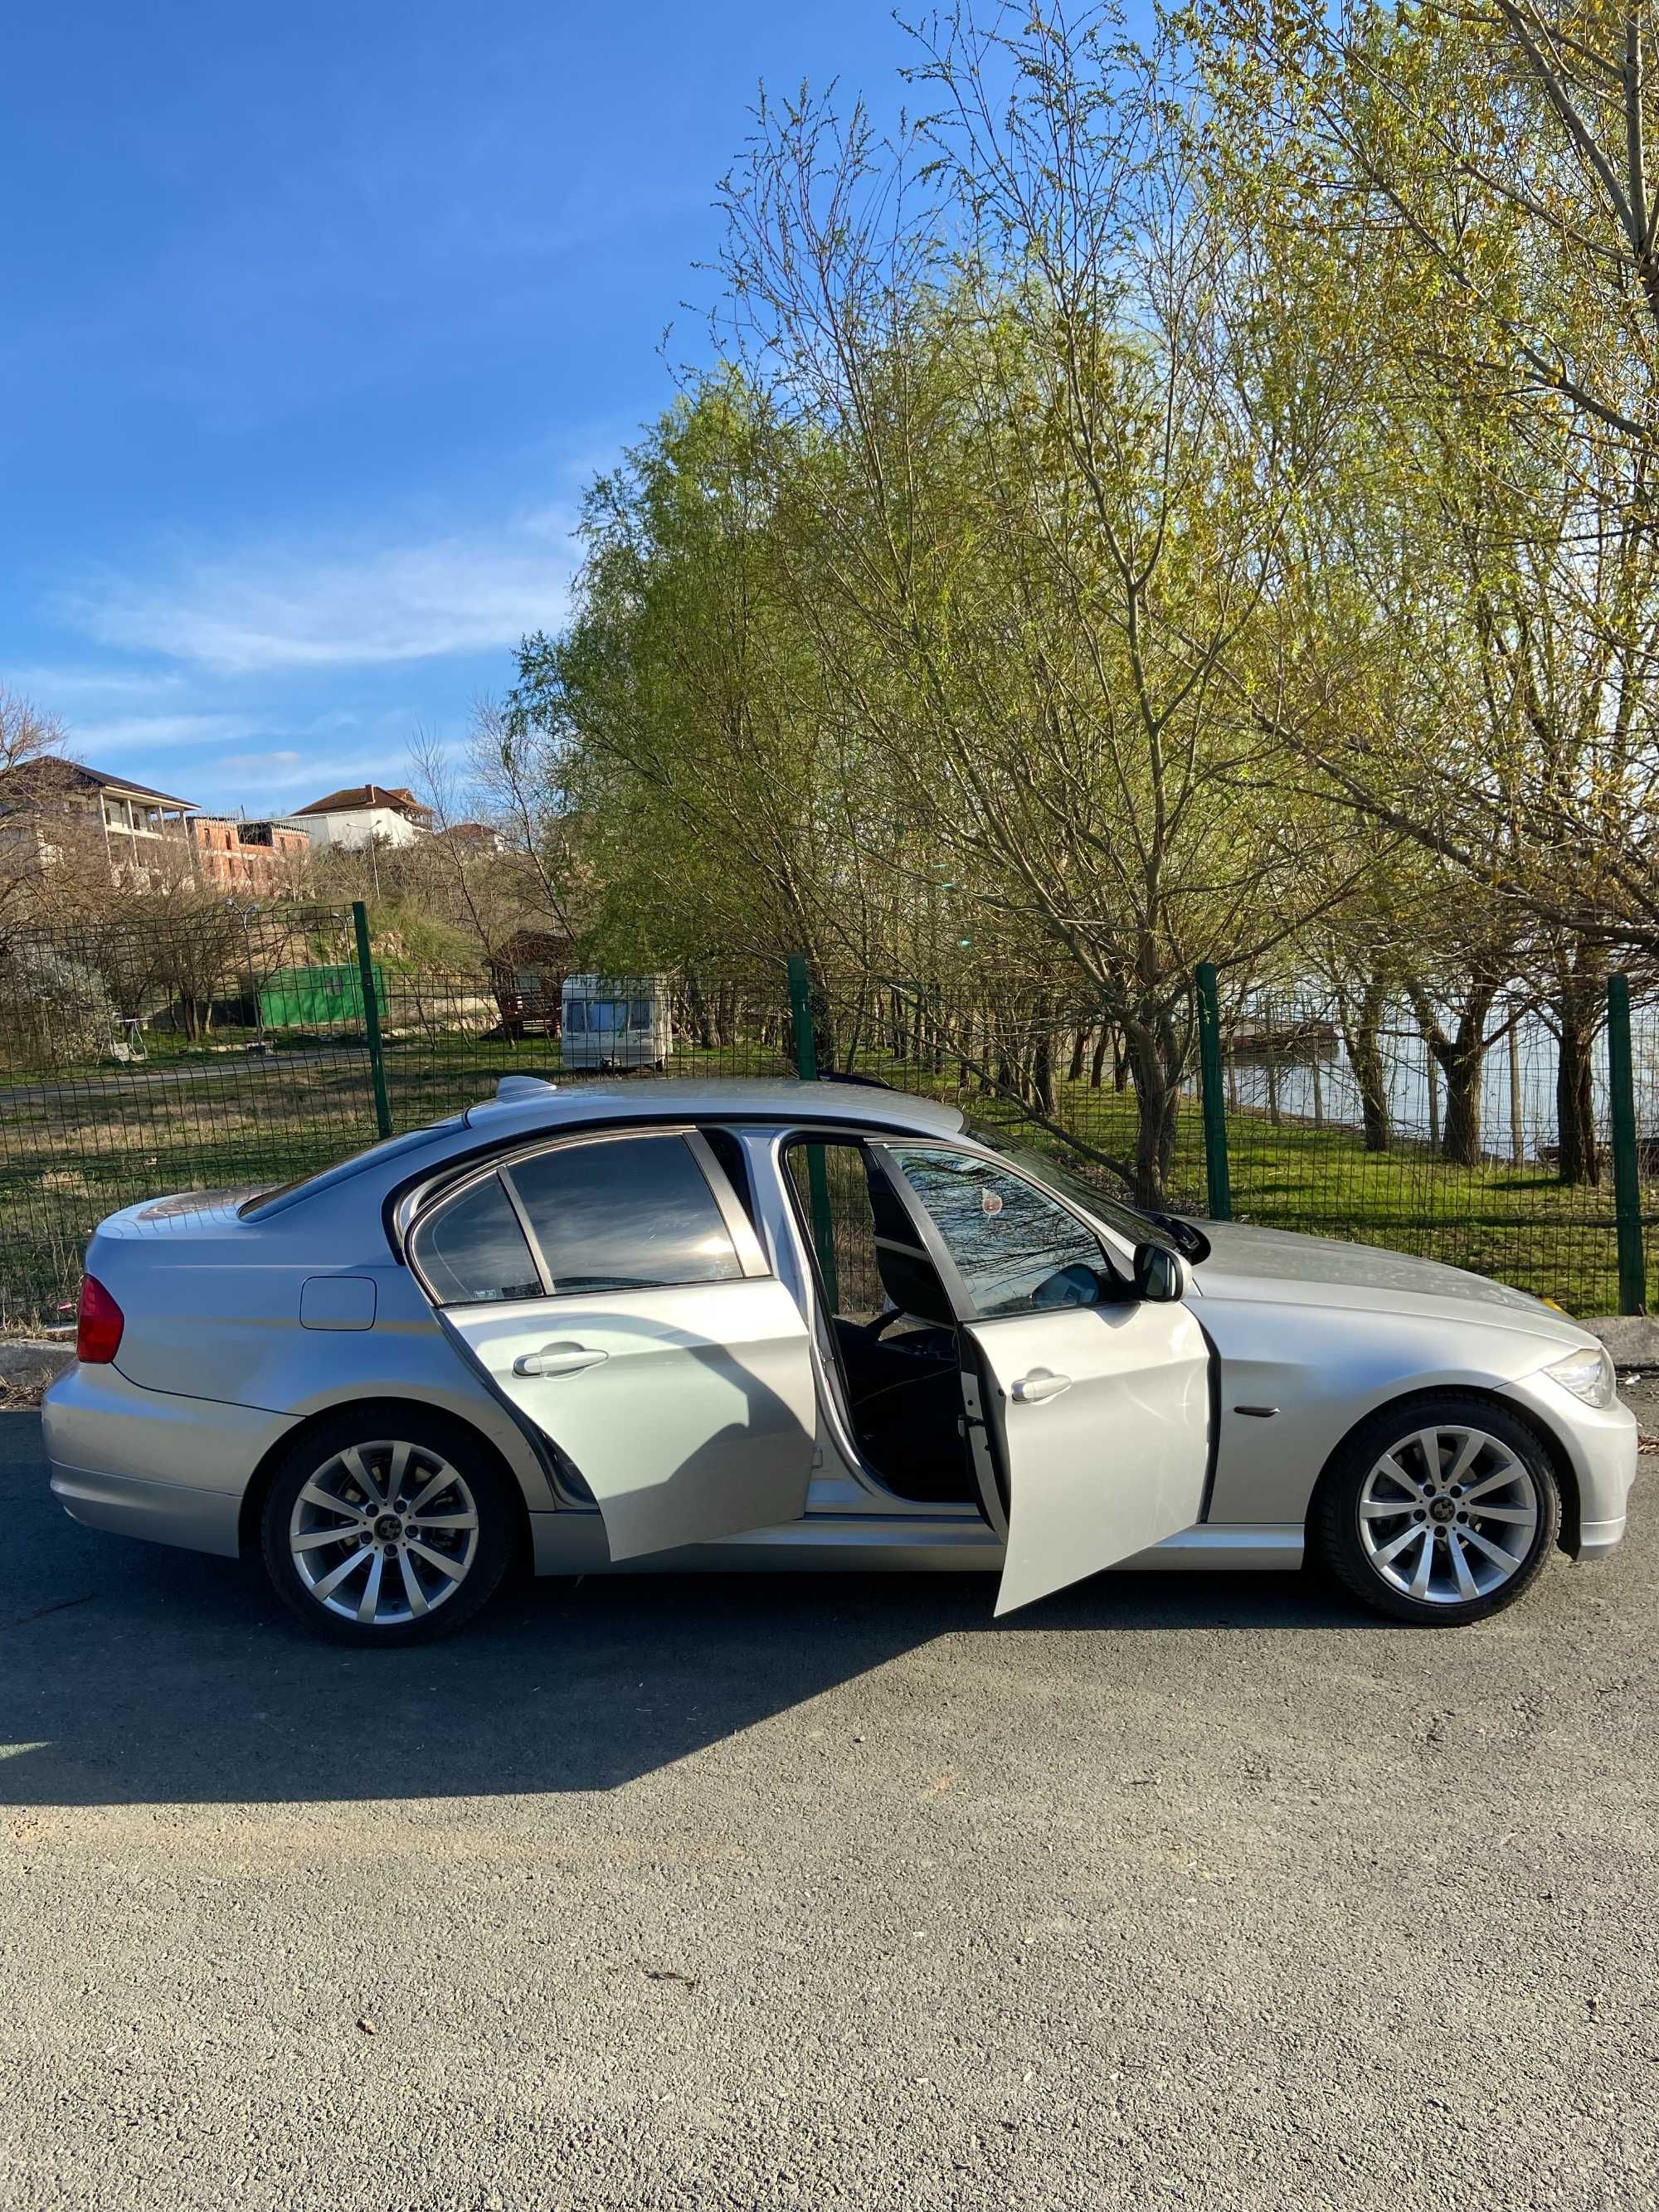 BMW E90 316i Facelift